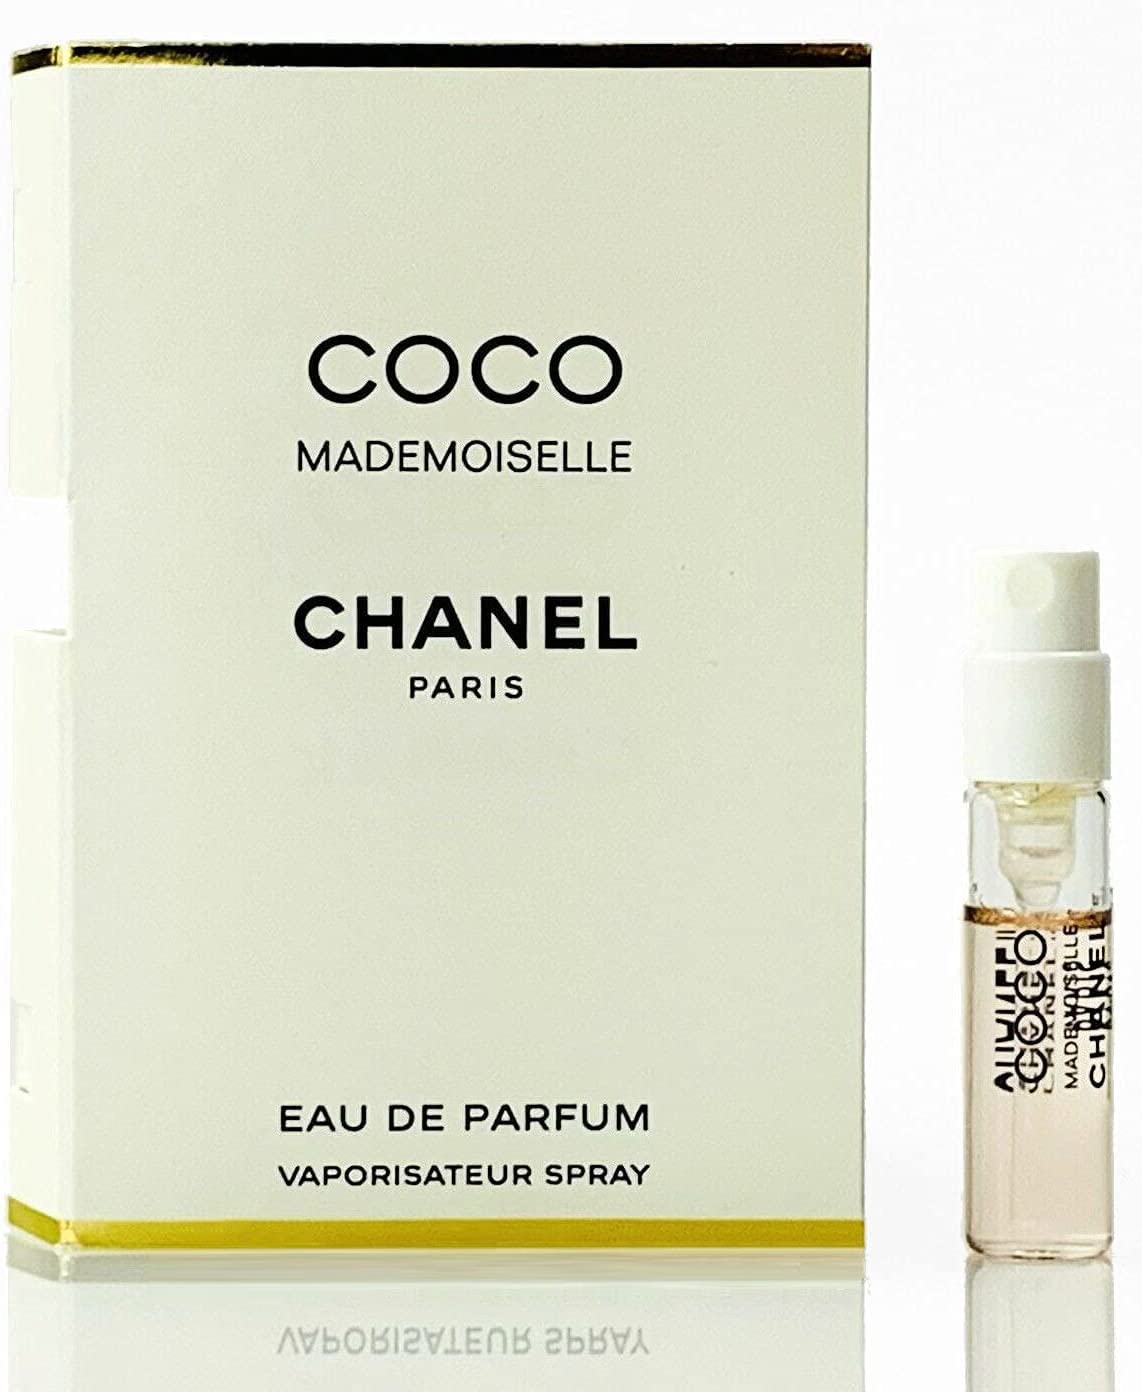 CHANEL  COCO MADEMOISELLE Eau de Parfum Intense Spray  Selfridgescom